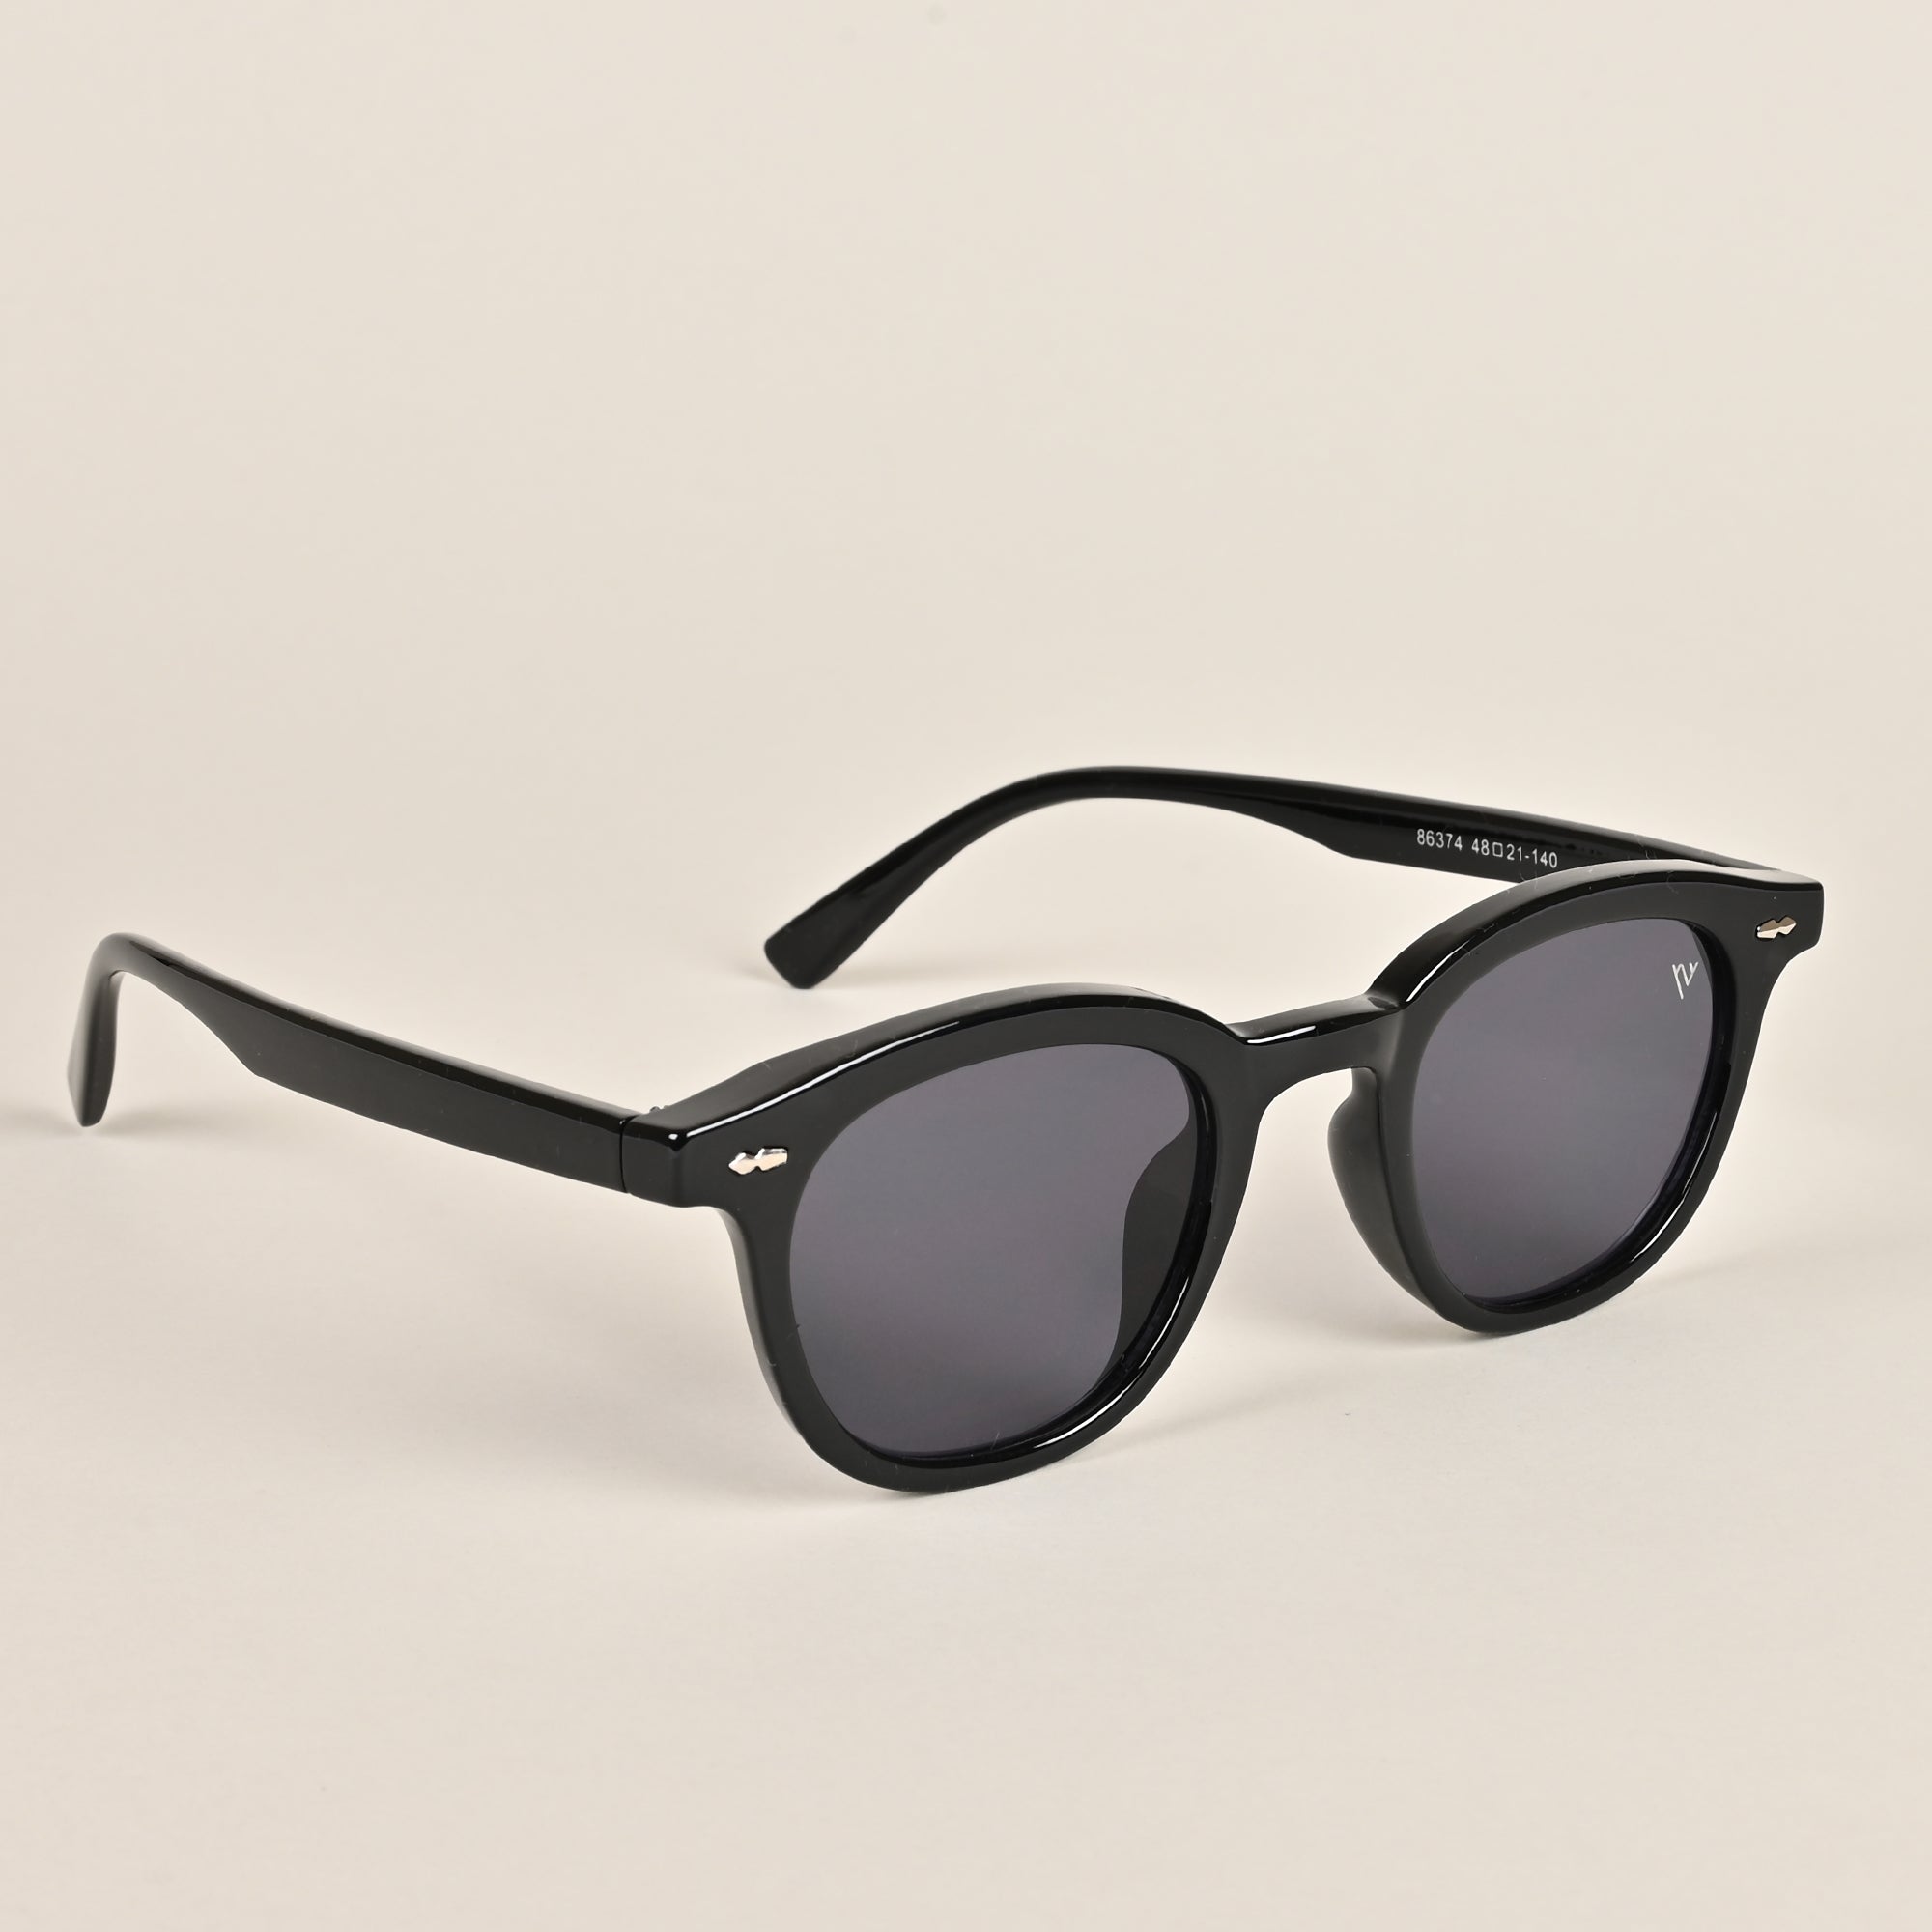 Voyage Black Round Sunglasses - MG3905